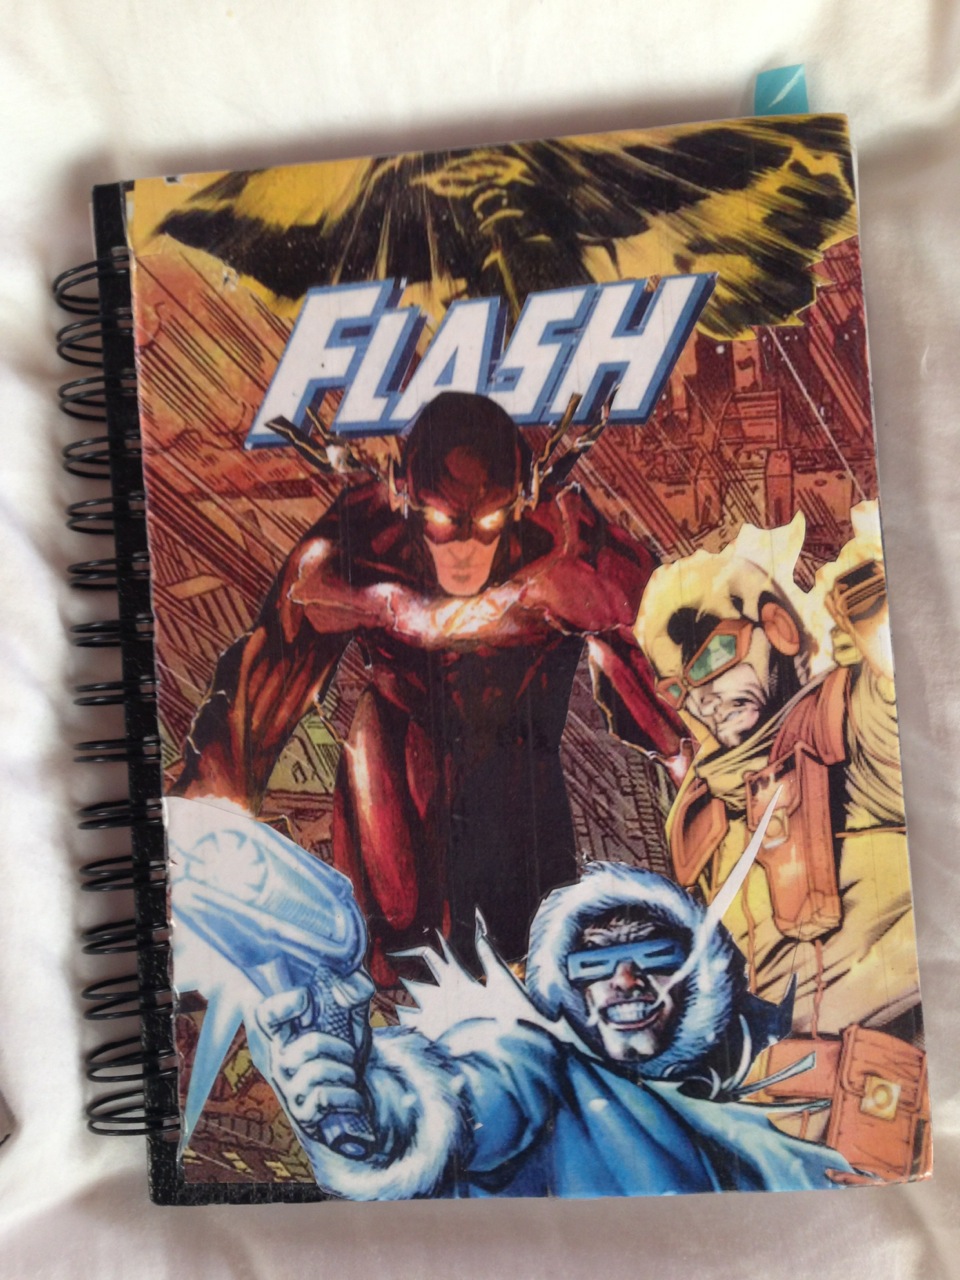 Prep Book The Flash 2014